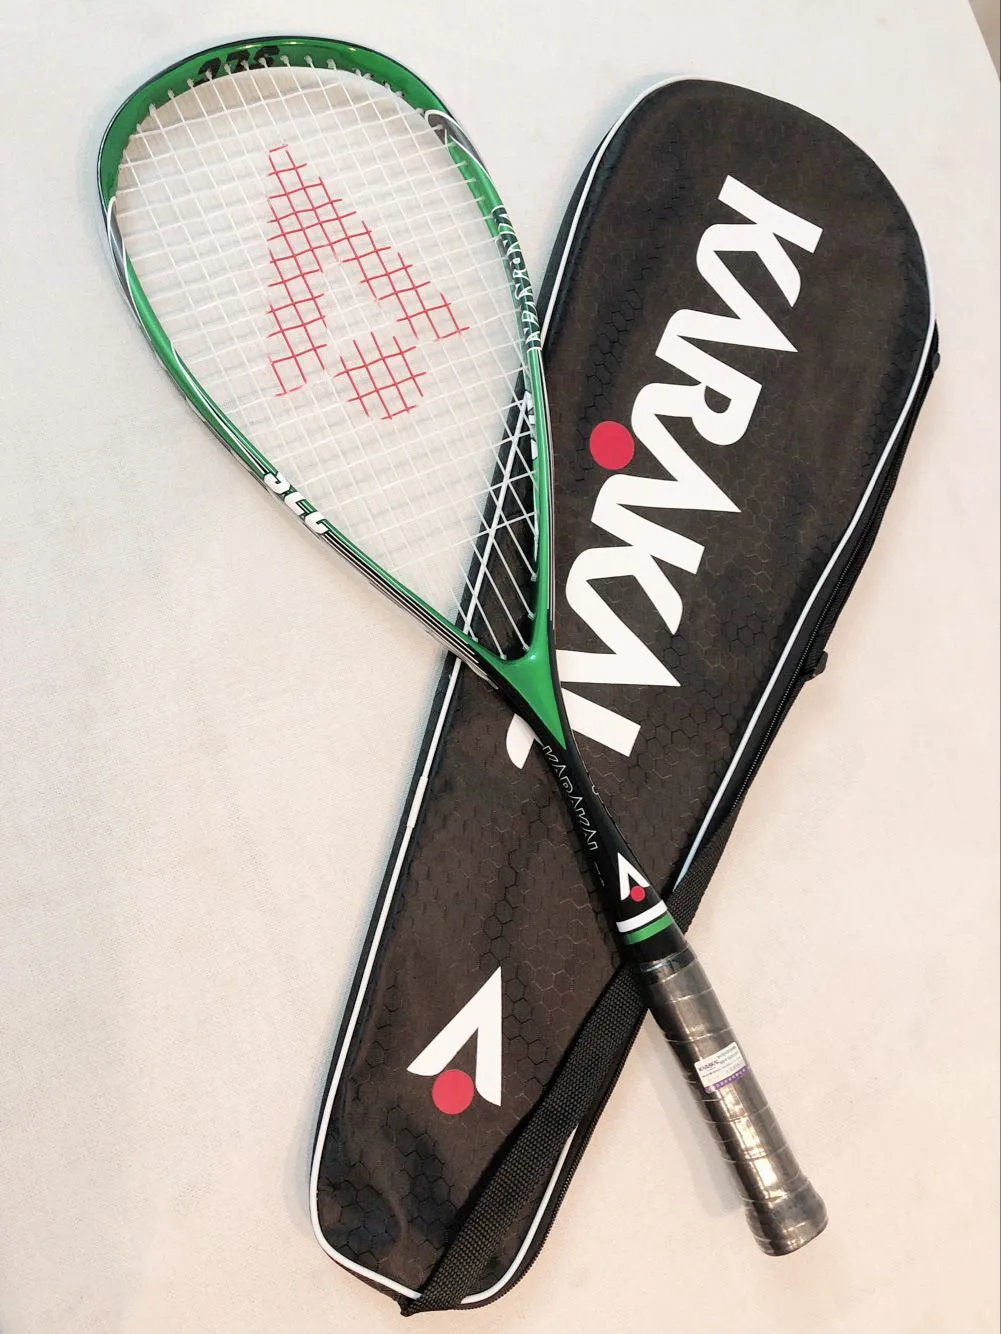 Karakal raqueta de Squash Original, Material de fibra de carbono SLC de  130g para entrenamiento deportivo de Squash, juego de partido para  jugadores, estudiantes, raqueta|Raquetas de squash| - AliExpress